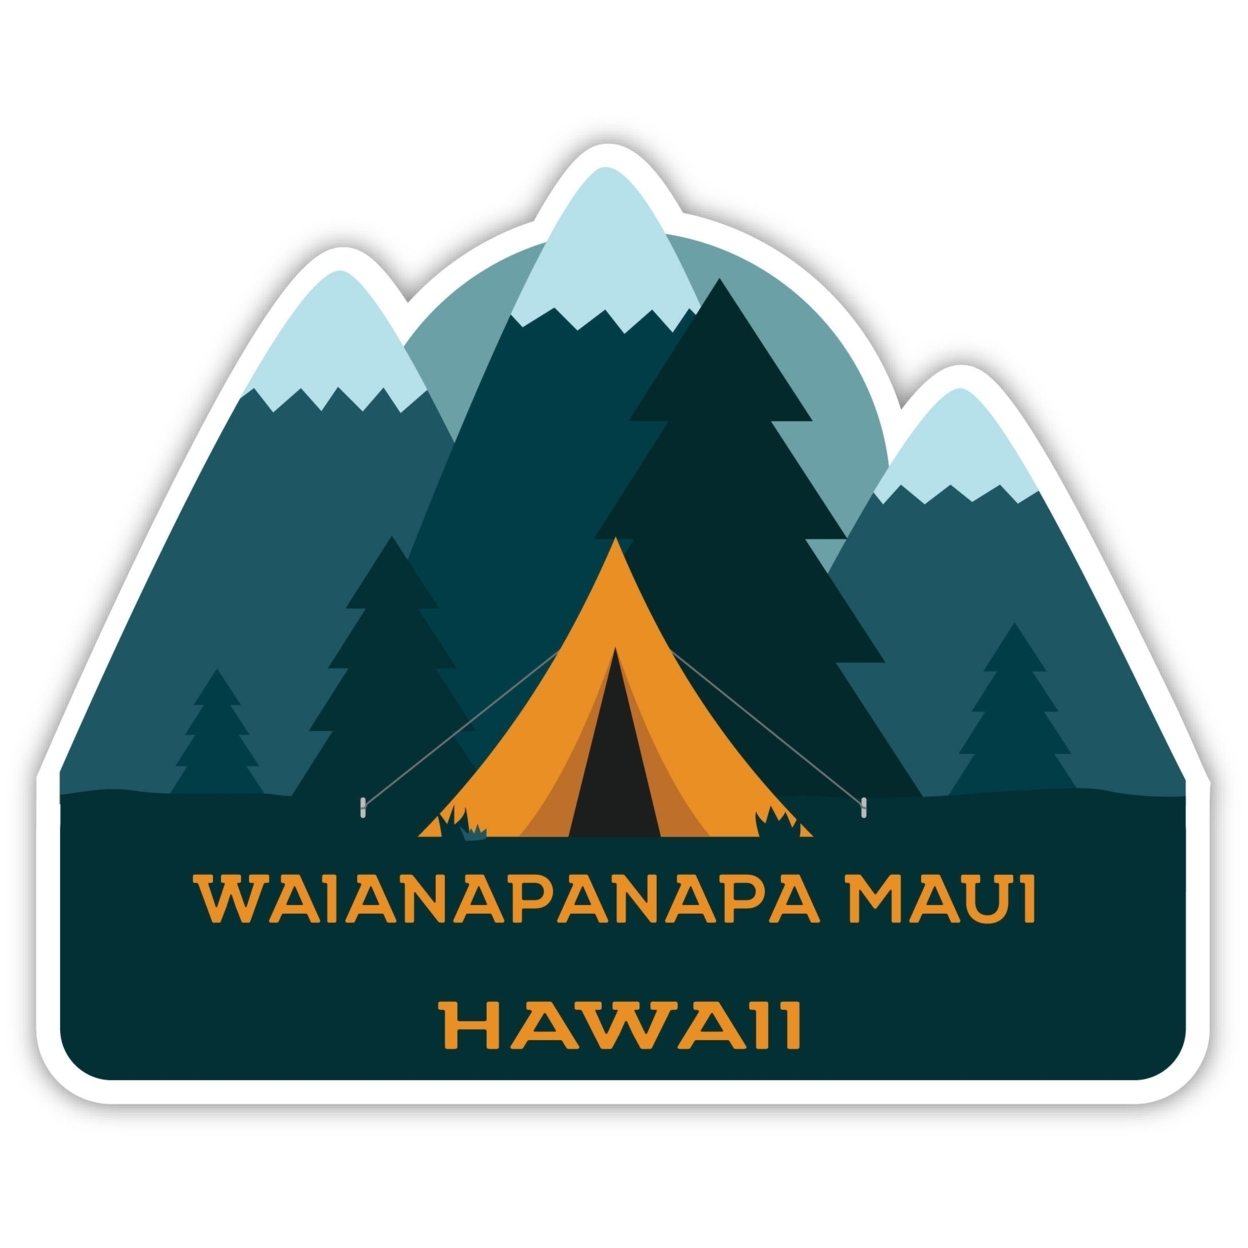 Waianapanapa Maui Hawaii Souvenir Decorative Stickers (Choose Theme And Size) - Single Unit, 4-Inch, Tent